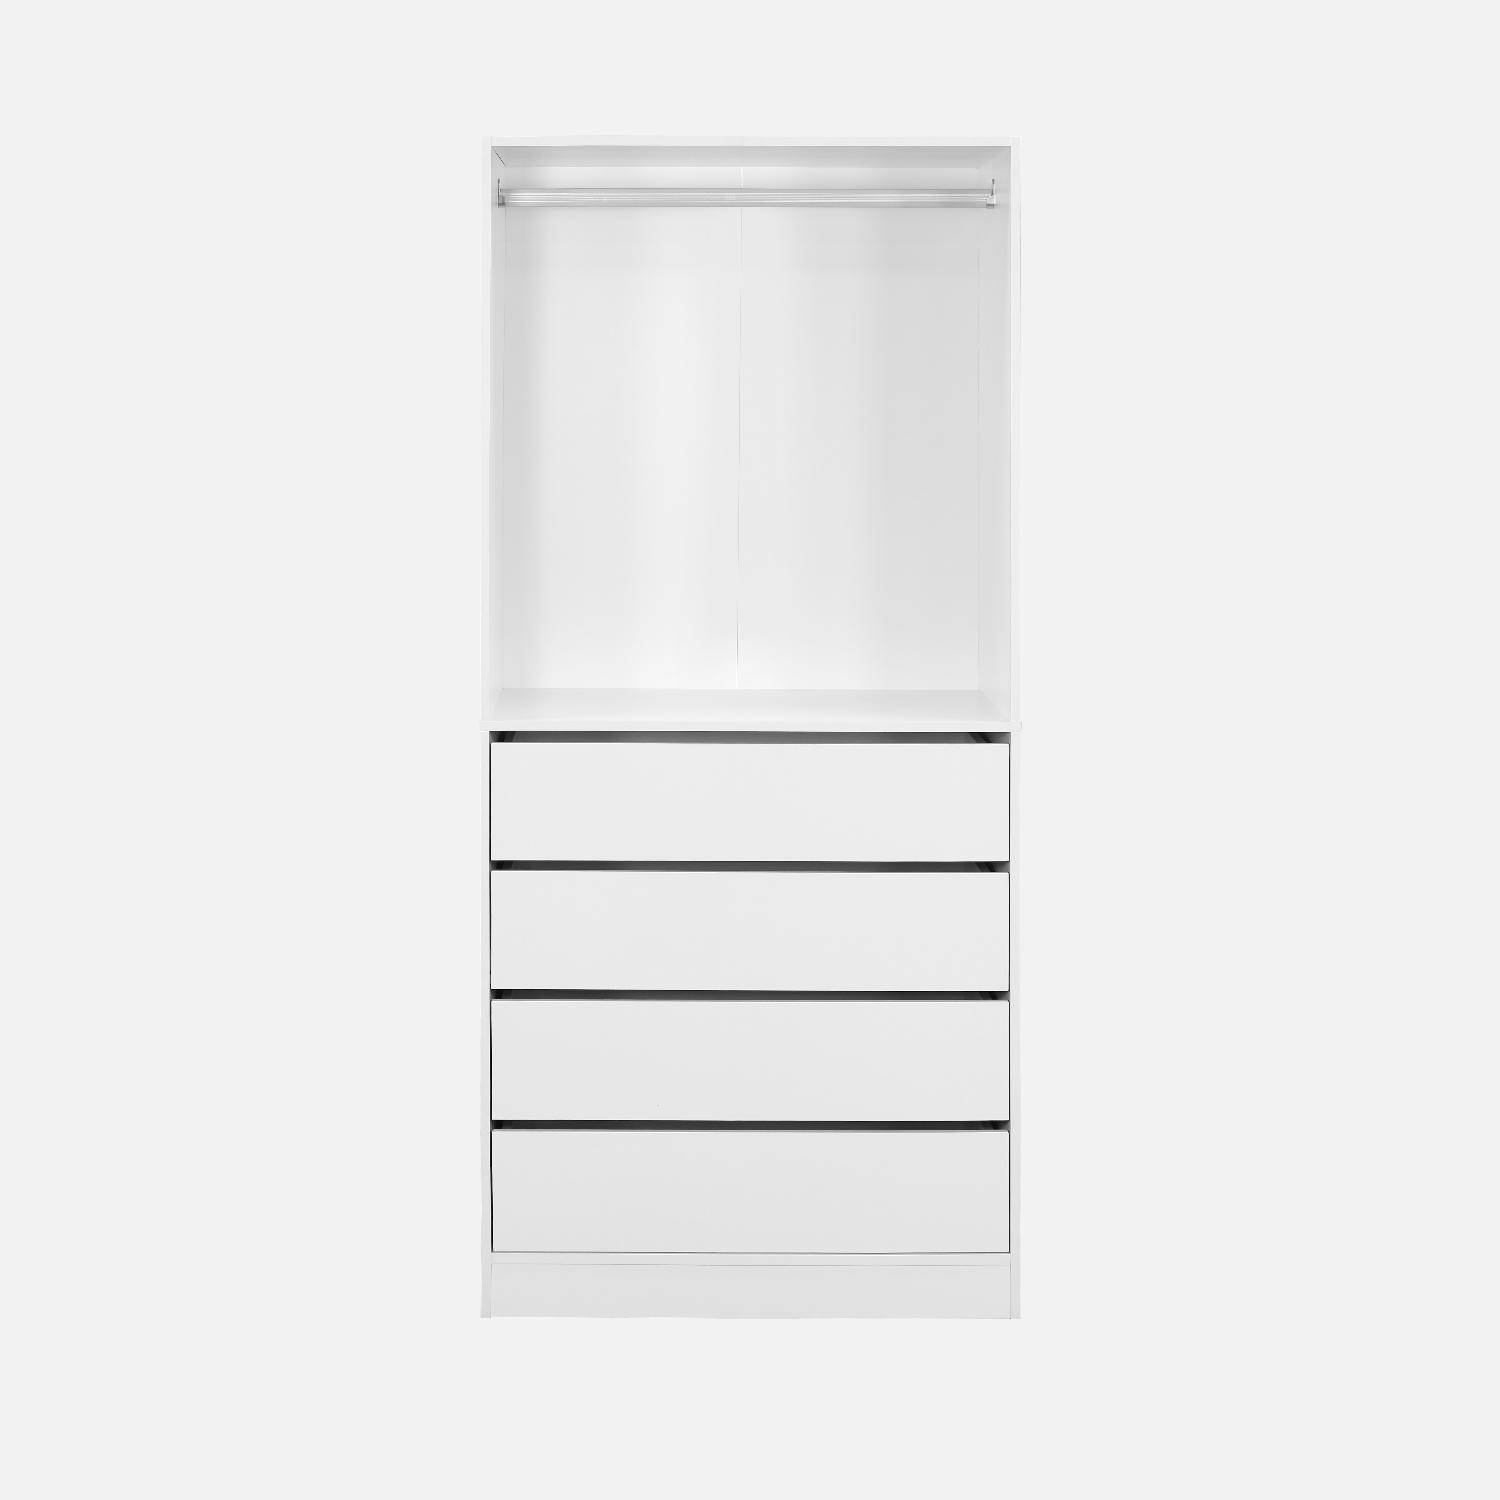 Modular open wardrobe drawer and rail unit, 80x45x180cm, Modulo, 4 drawers, 1 clothes rail, White,sweeek,Photo5